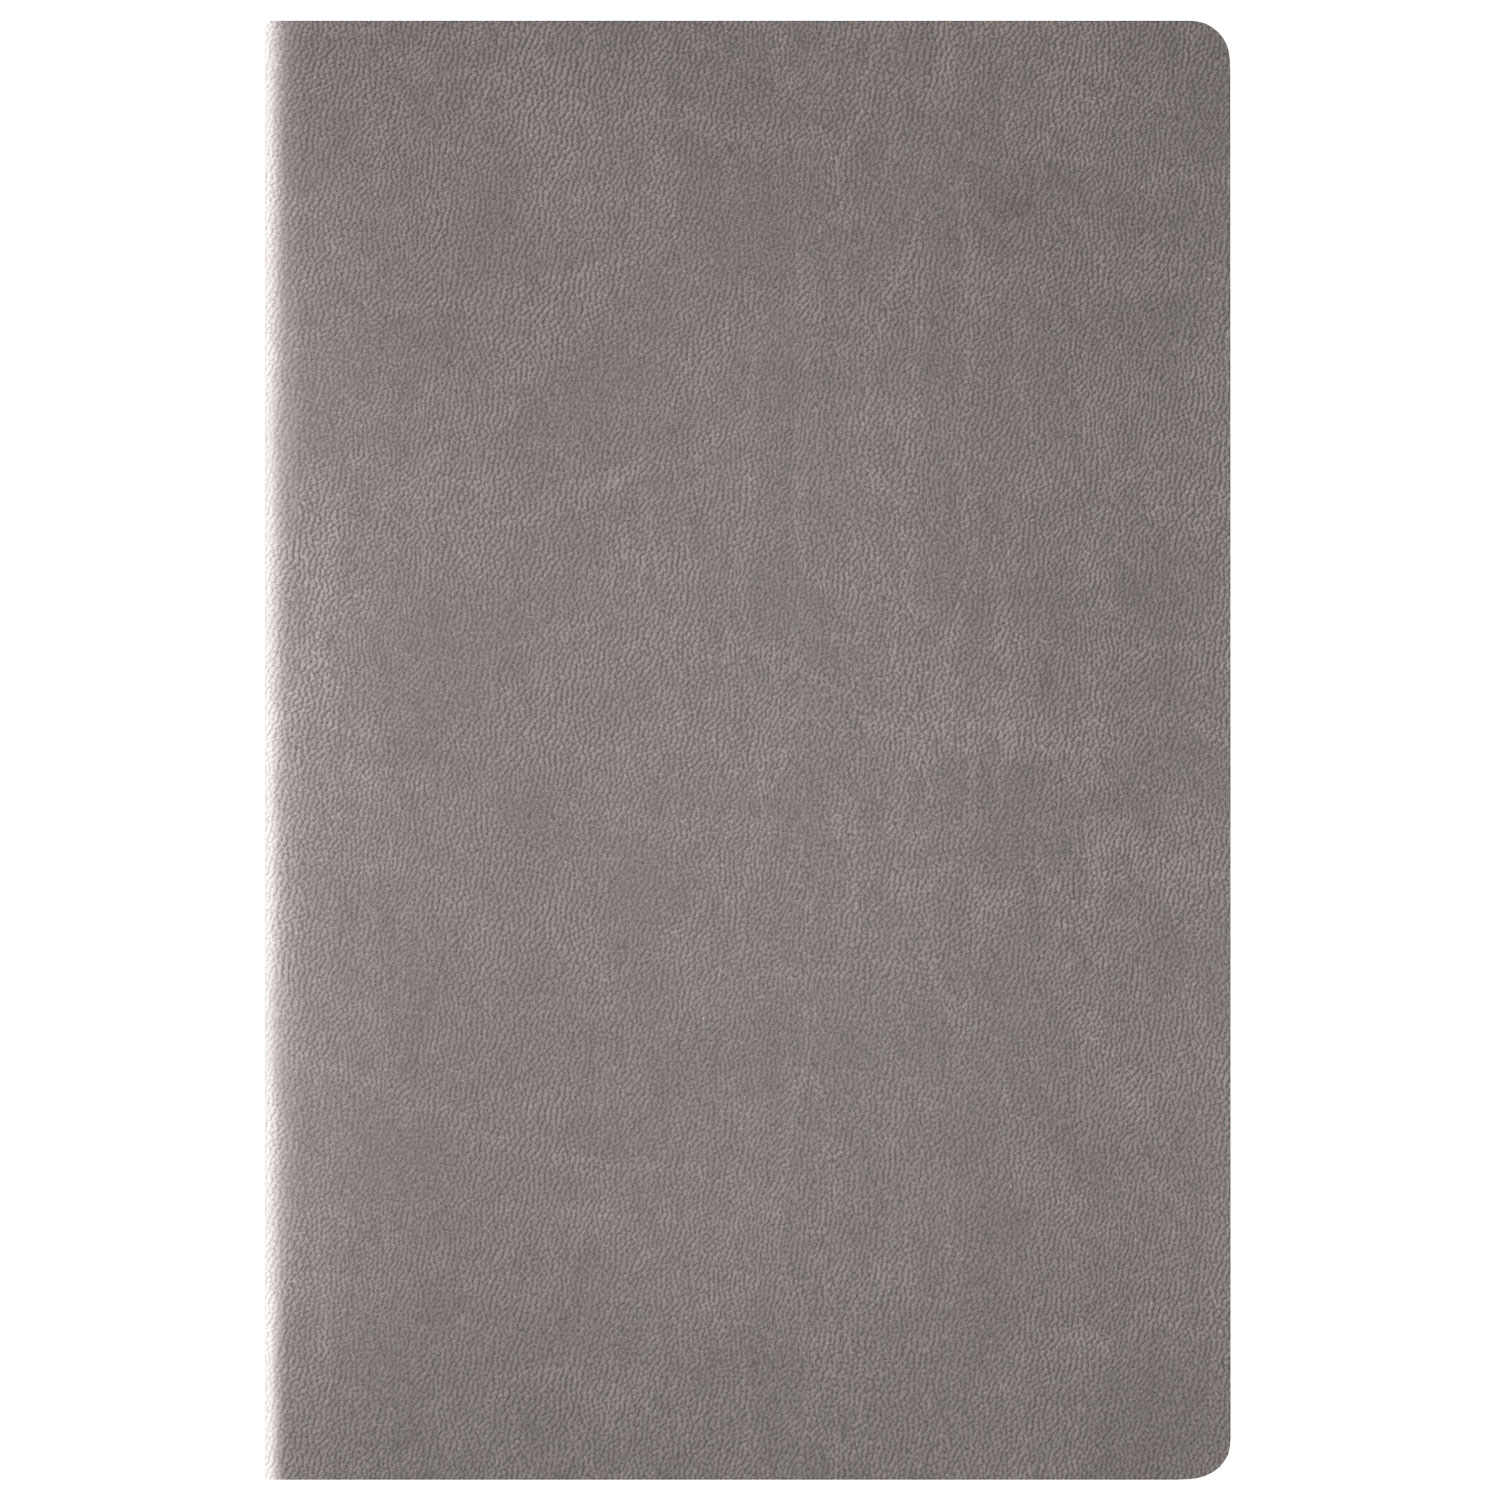  Portobello Notebook Trend, Latte new slim, /